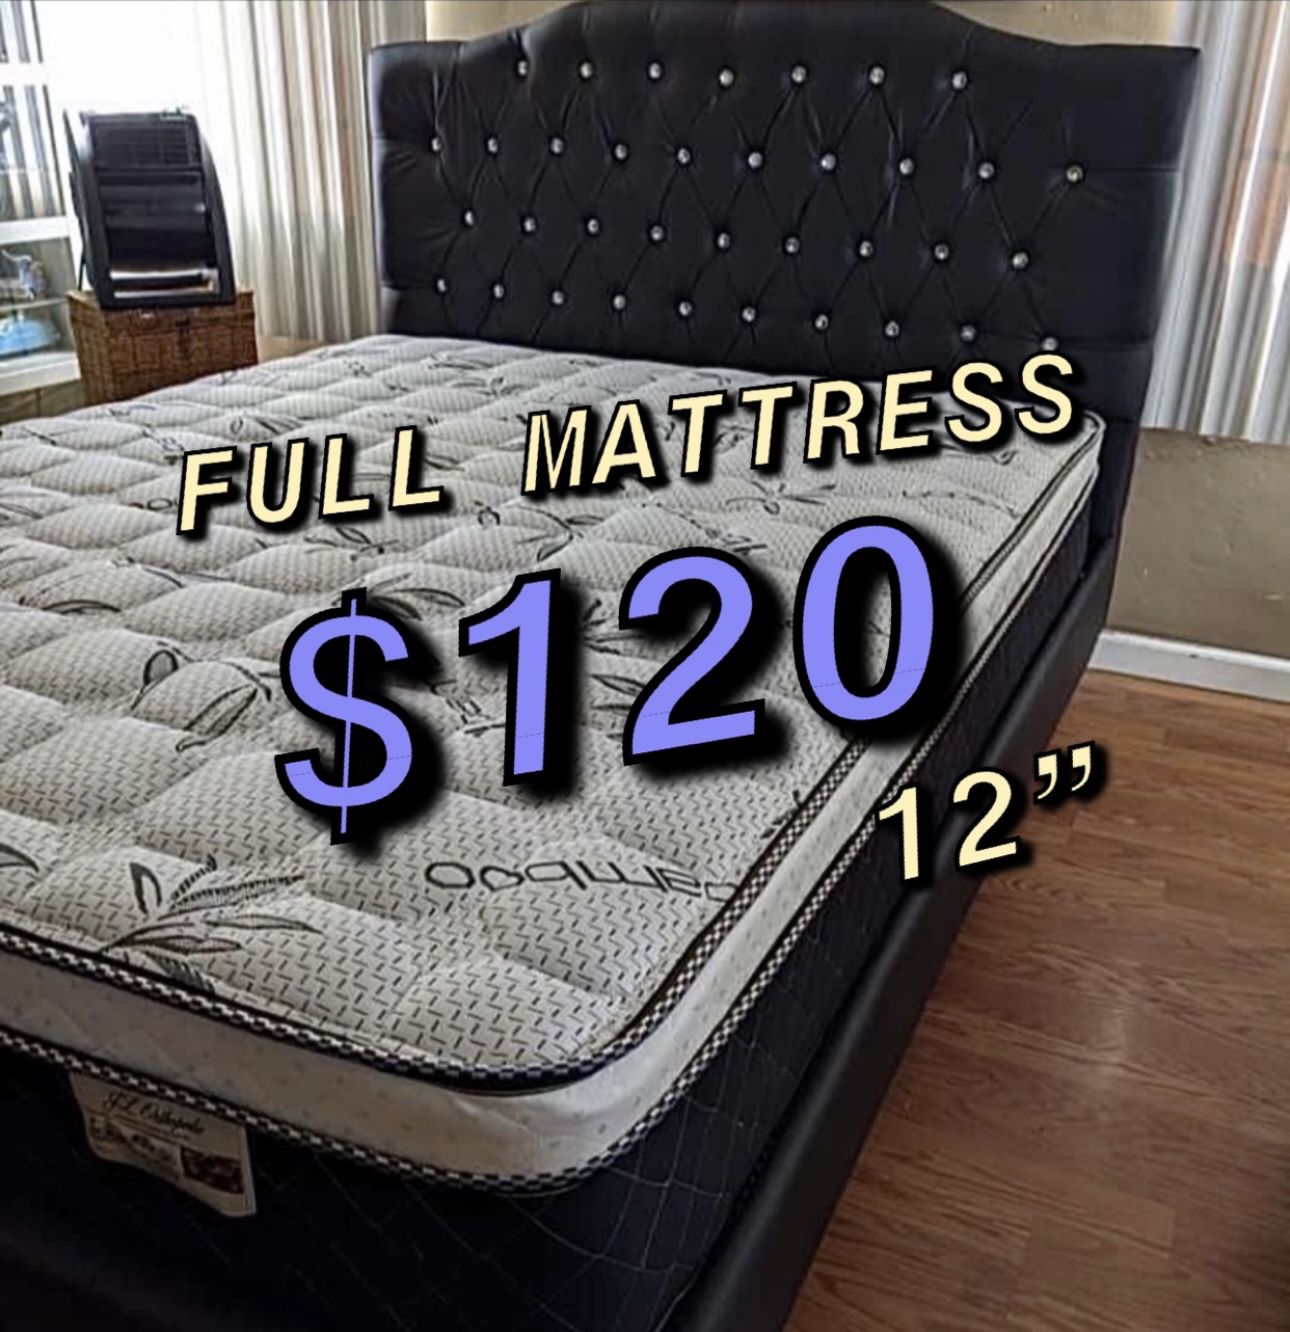 Brand New Full Mattress $120